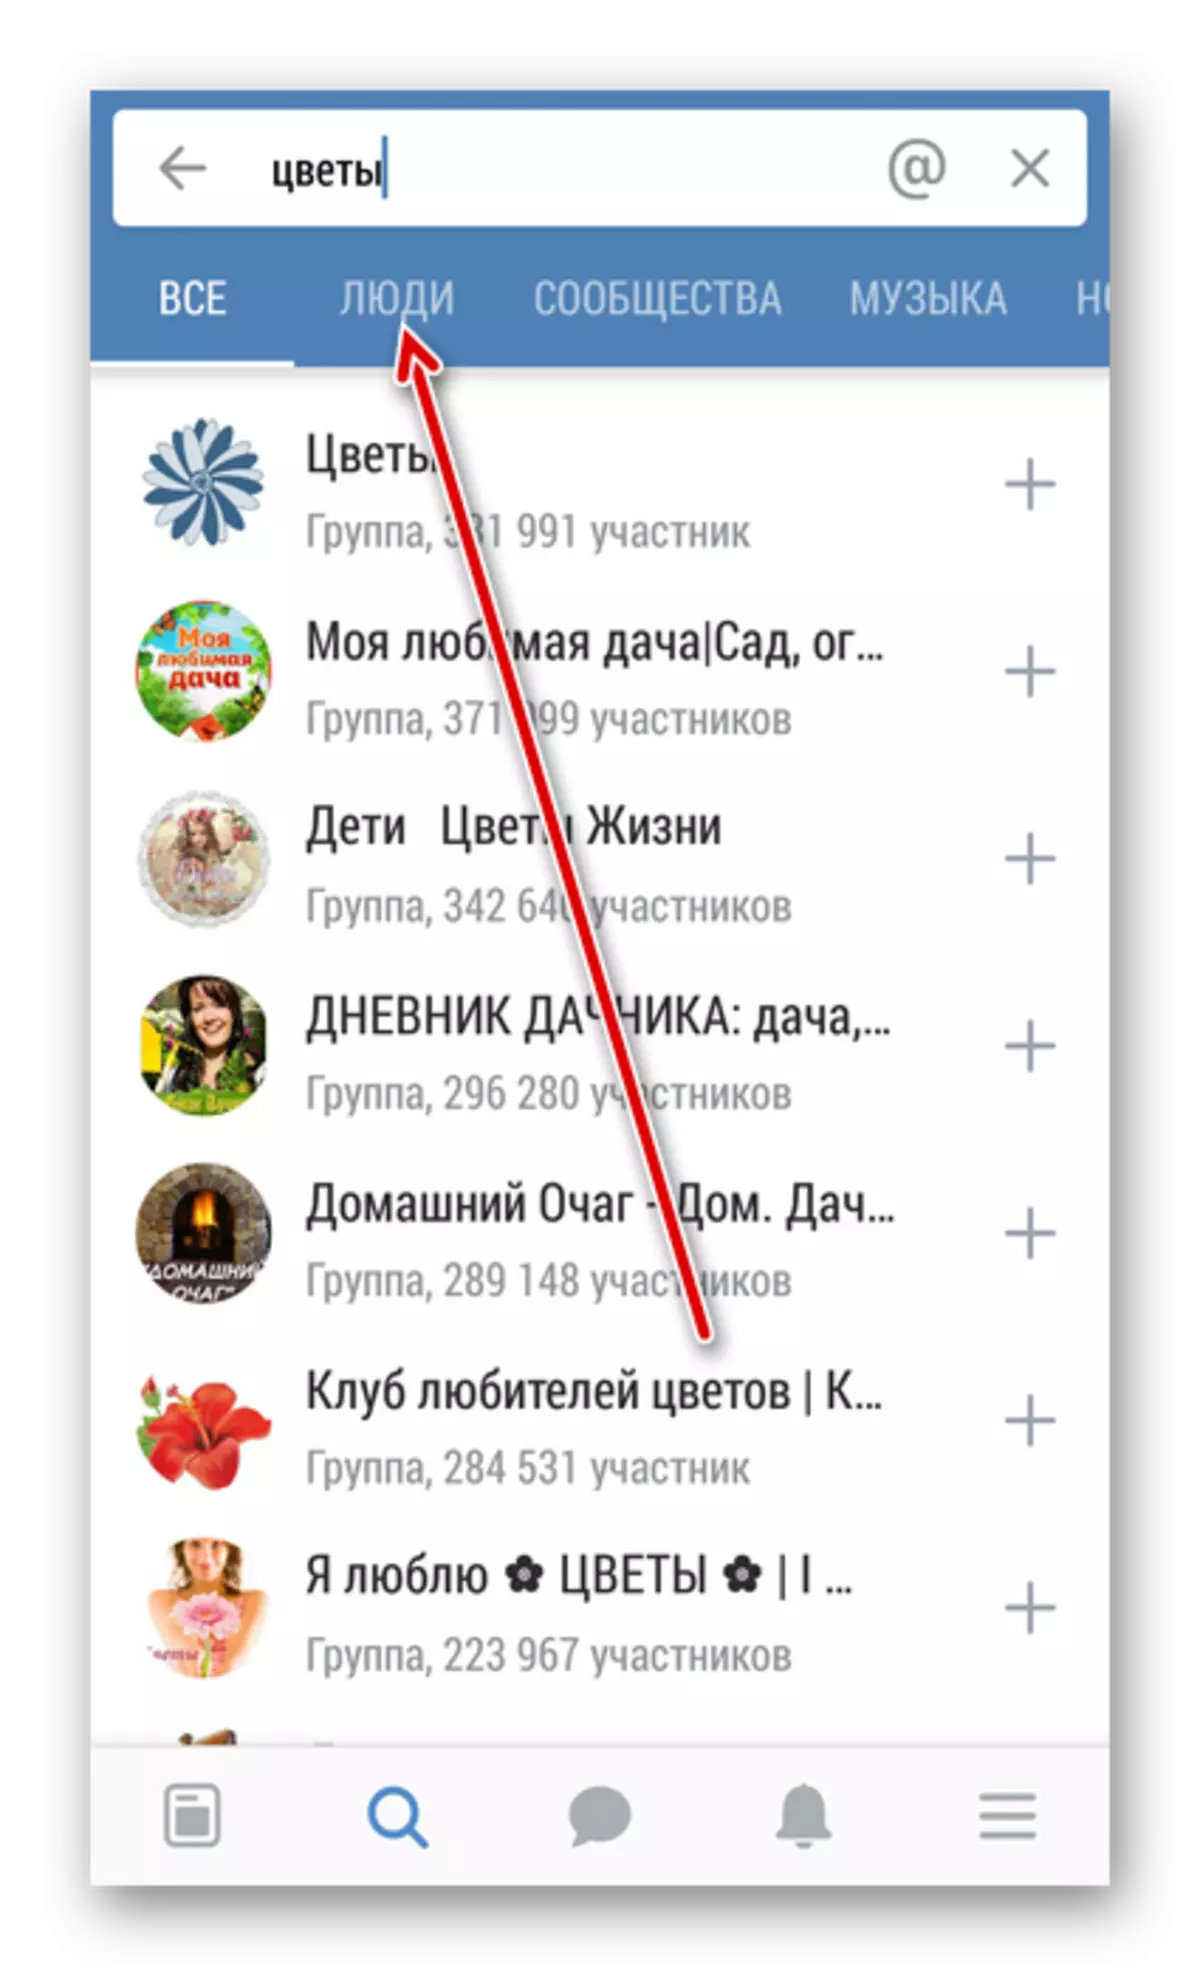 VKontakte பயன்பாட்டில் உள்ள நபர்களுக்கான தேடலுக்கு மாறவும்